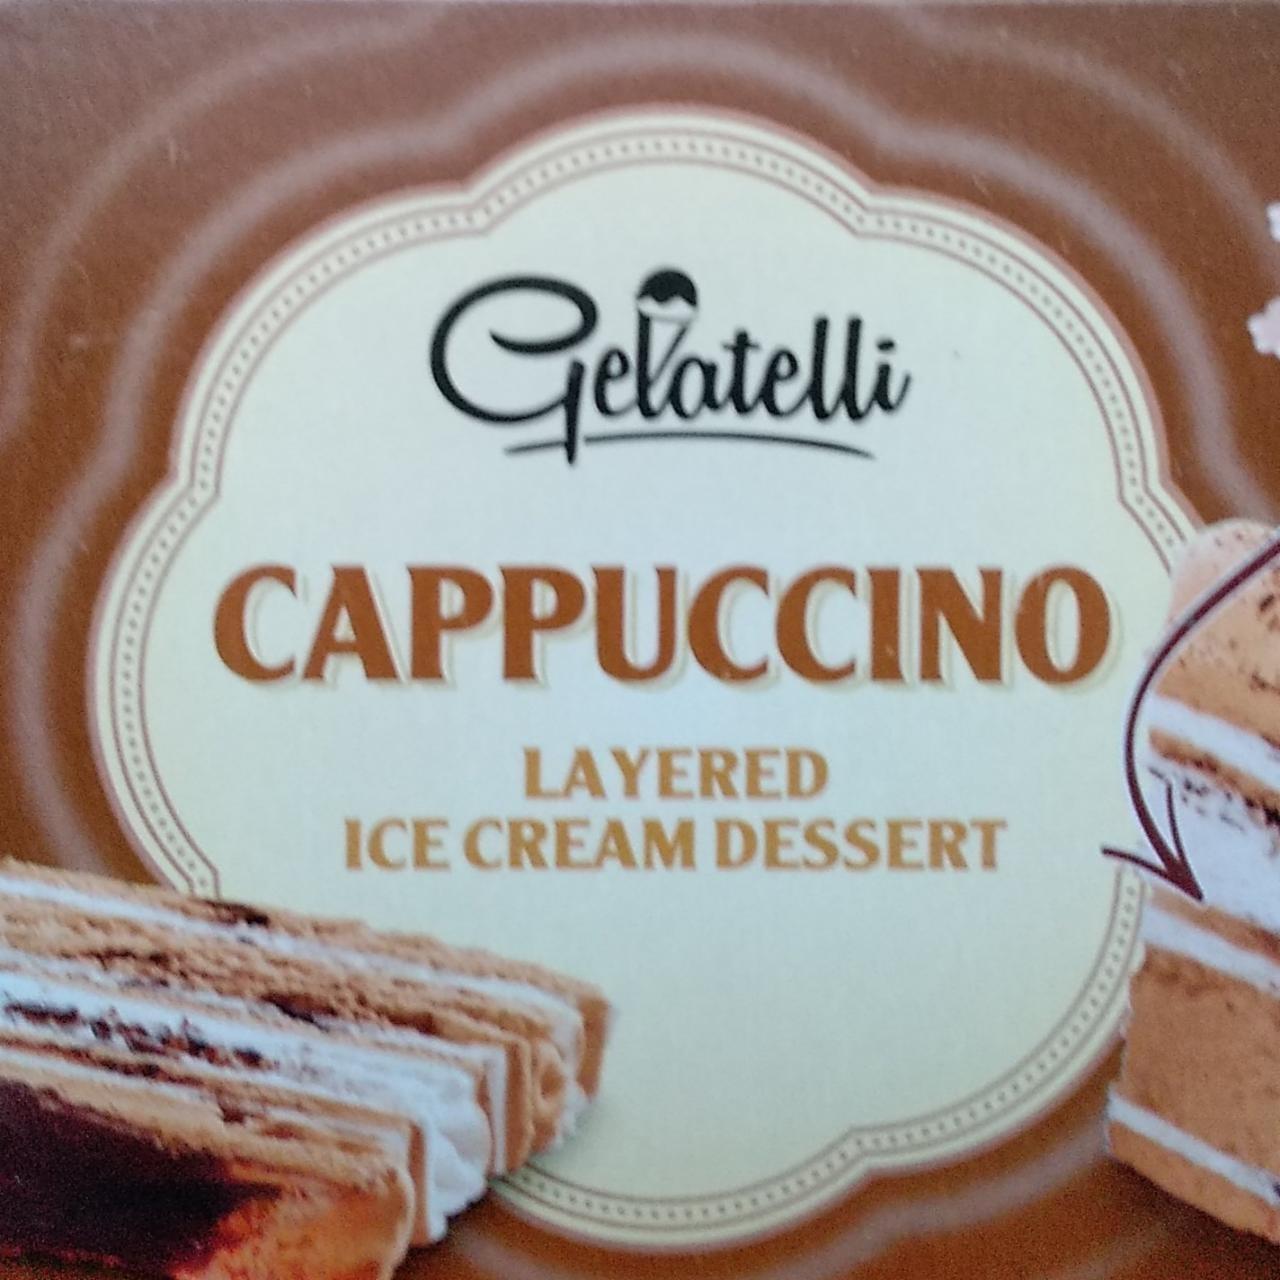 Képek - Cappuccino layered ice cream dessert Gelatelli